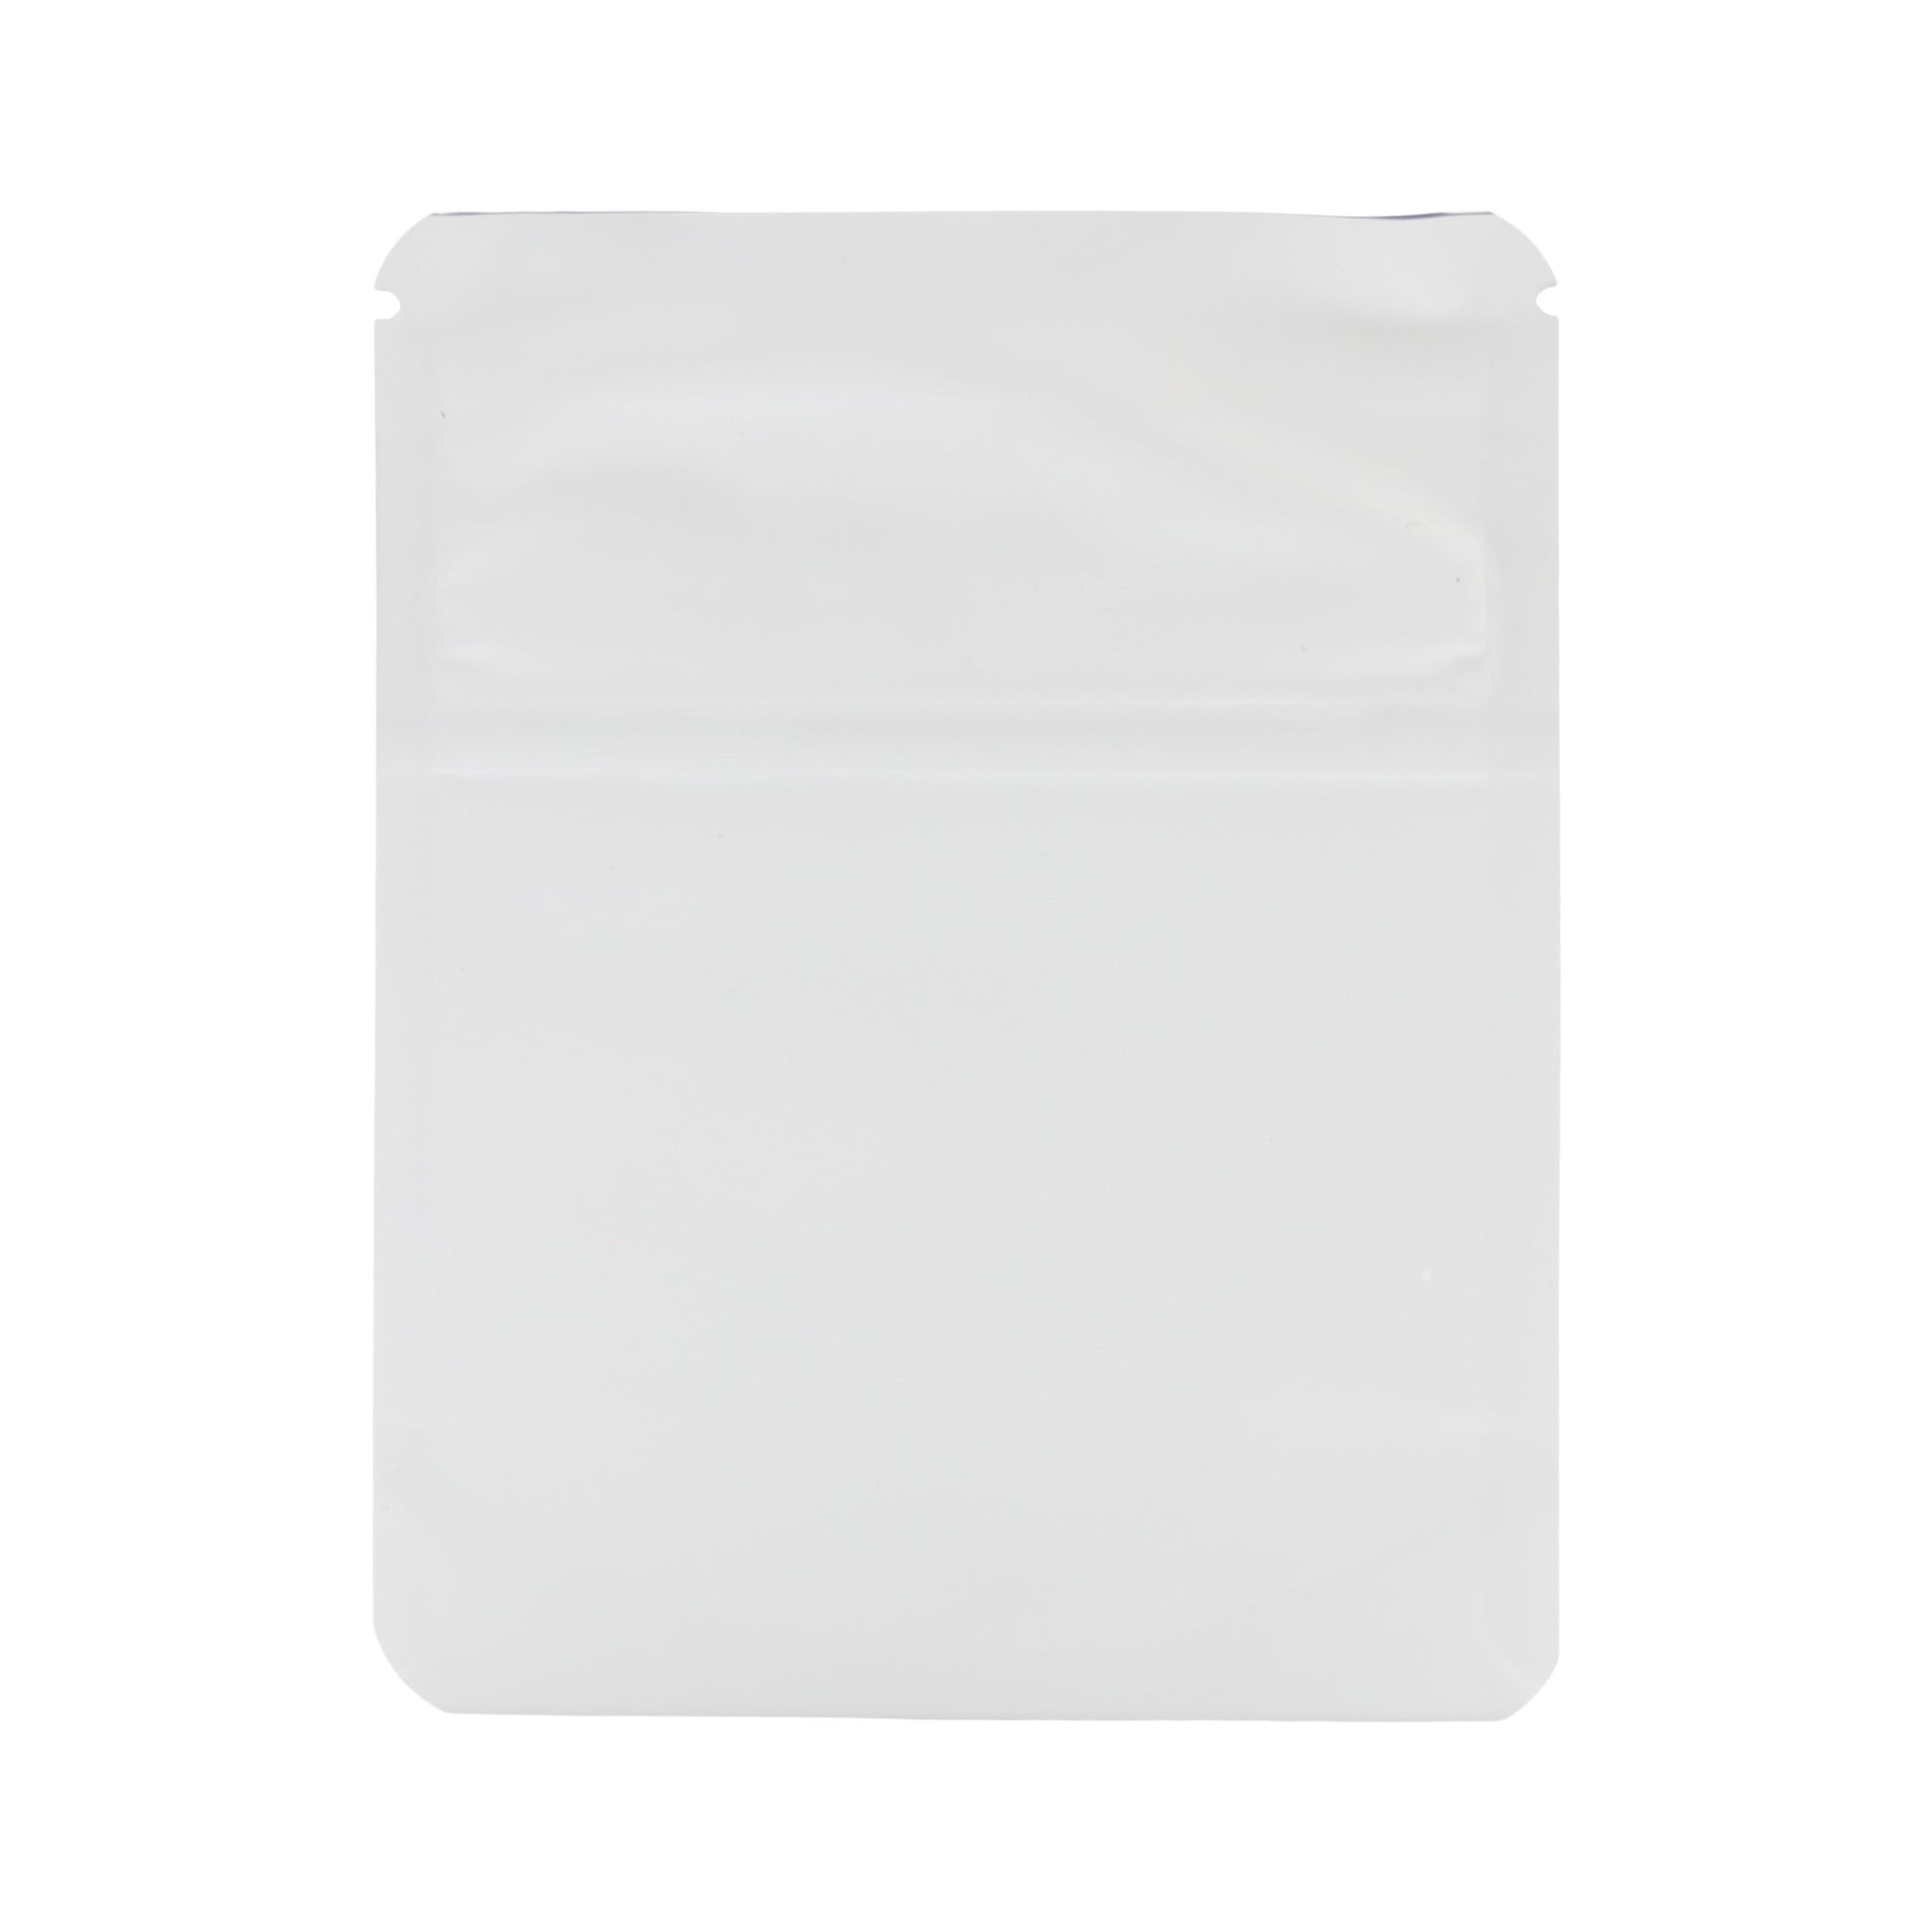 Bag King Child-Resistant Opaque Bag (1 gram) 3.5” x 4.5” Matte White